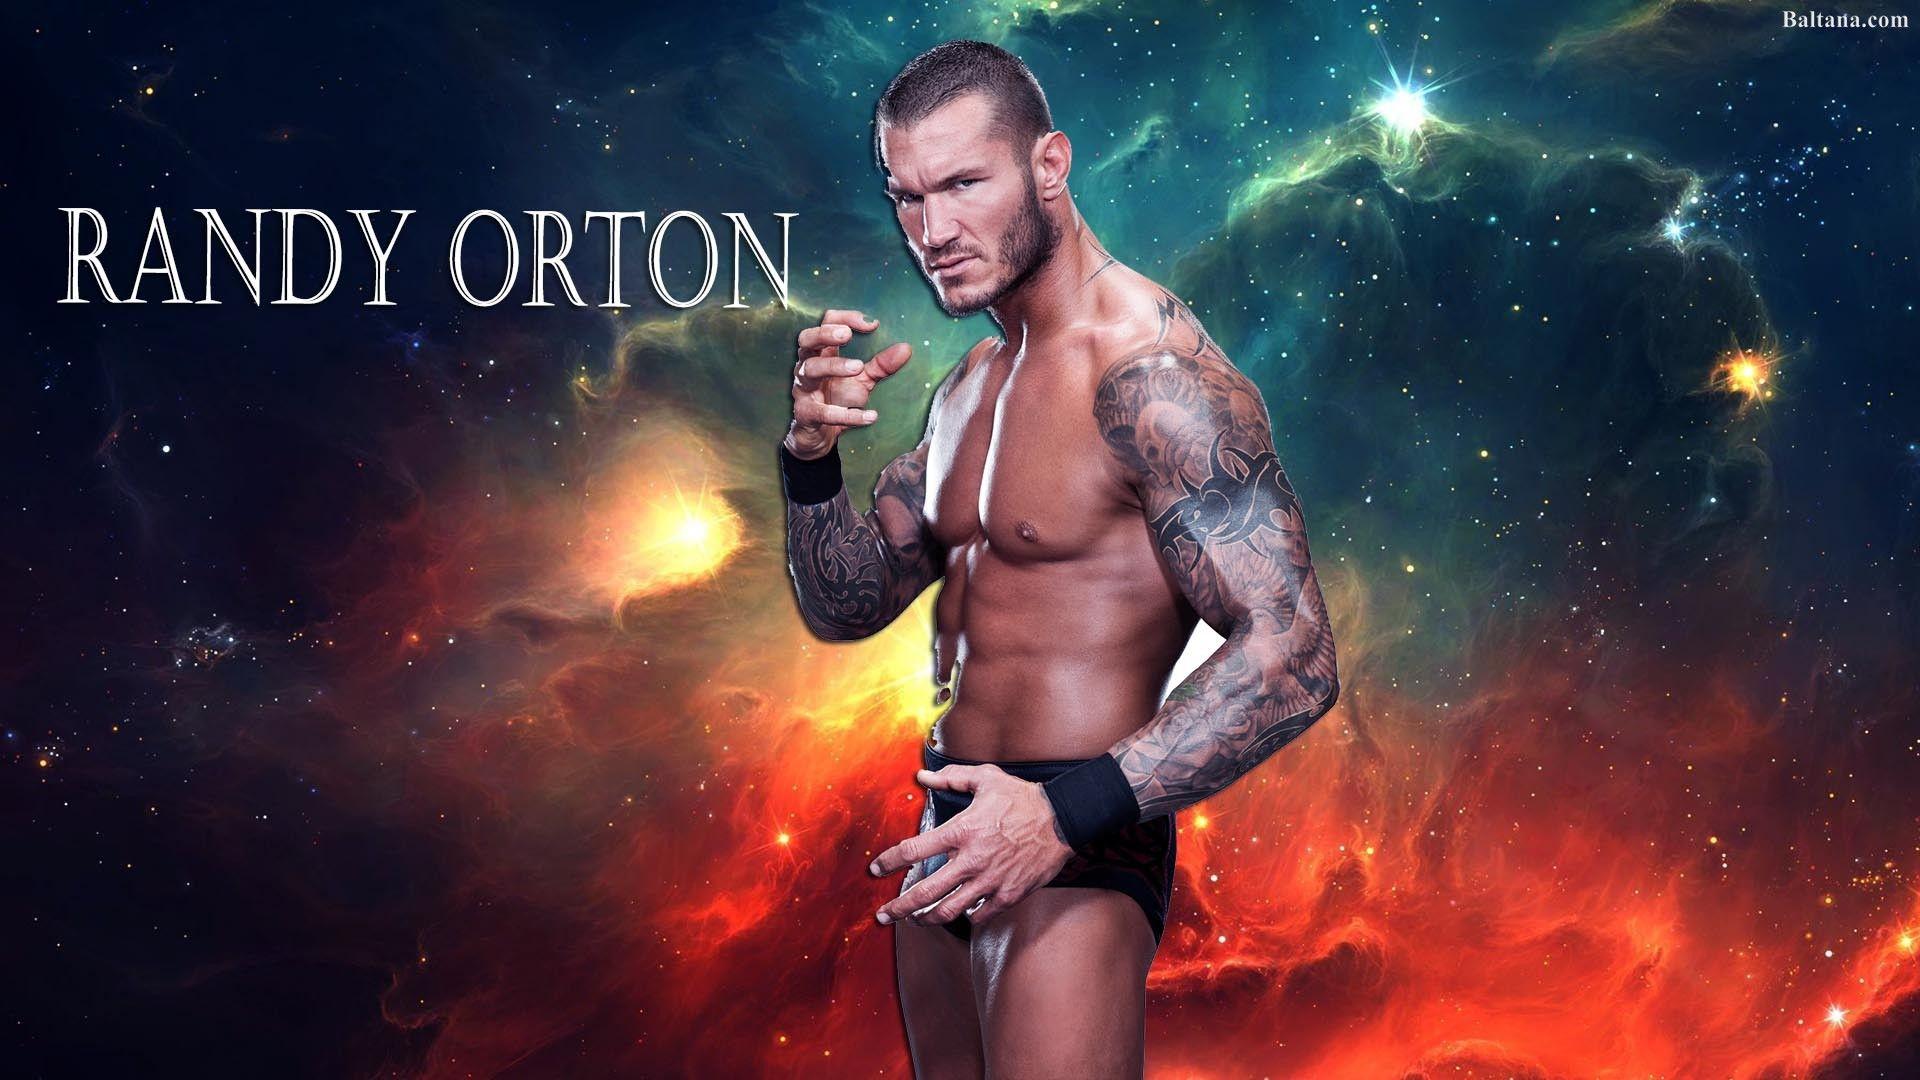 Randy Orton Wallpaper HD Background, Image, Pics, Photo Free